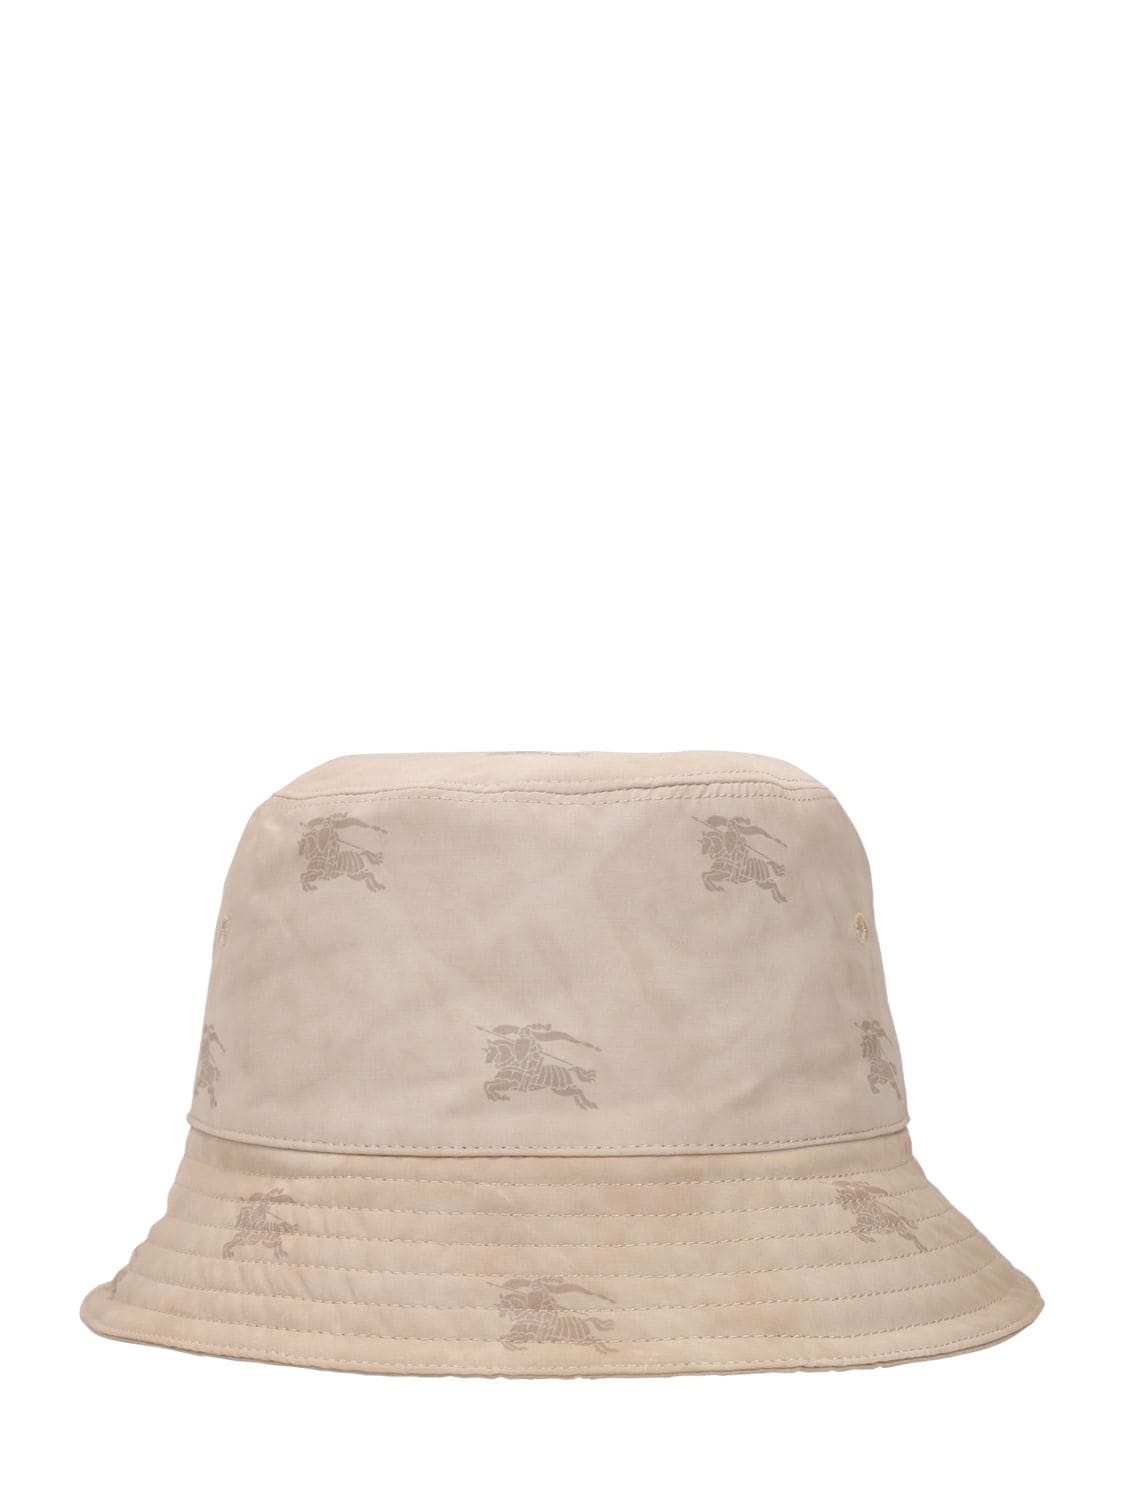 Burberry Knight Printed Cotton Blend Bucket Hat In Beige